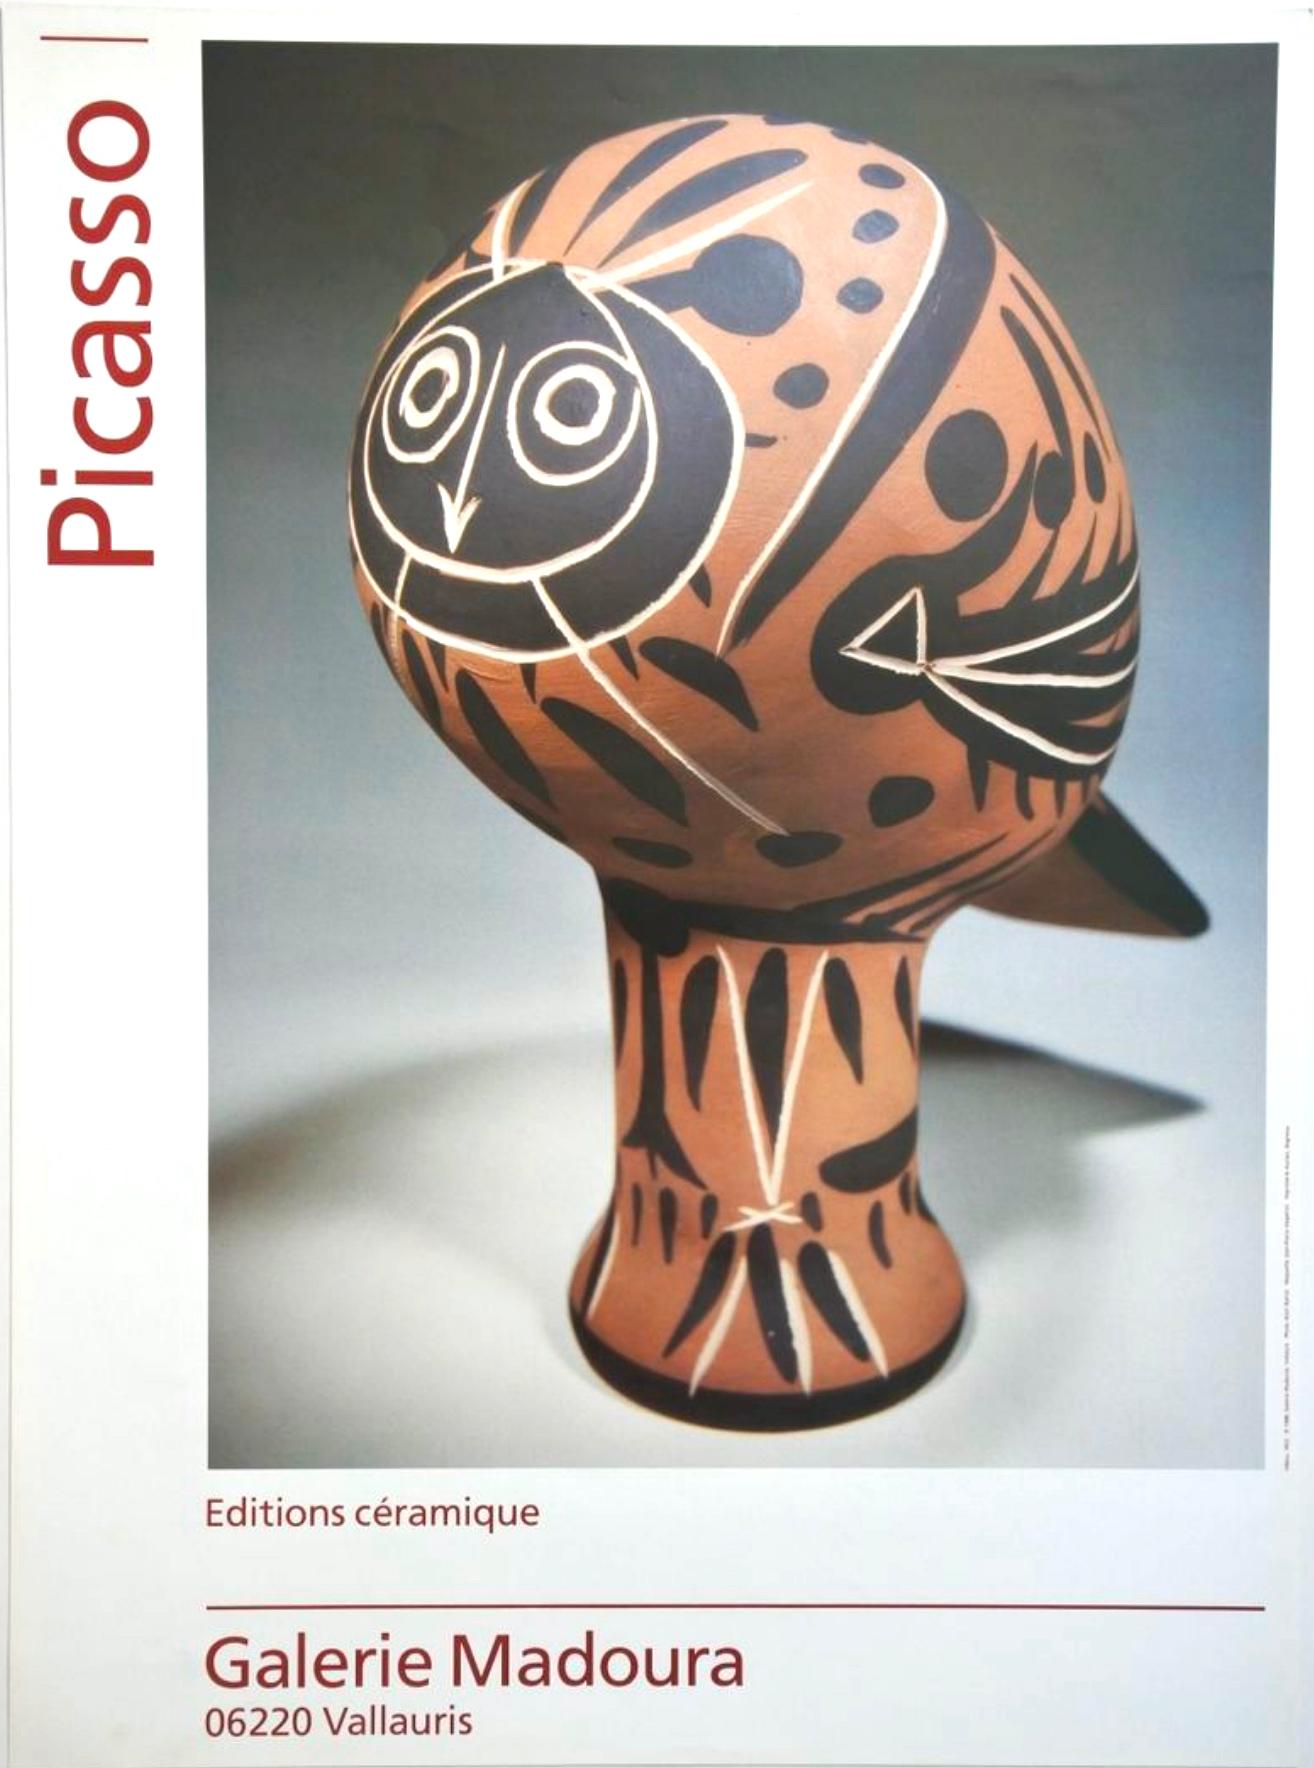 Hibou, Pablo Picasso, earthenwar, 1950's, edition 18/25 pcs, Madoura Vallauris 2